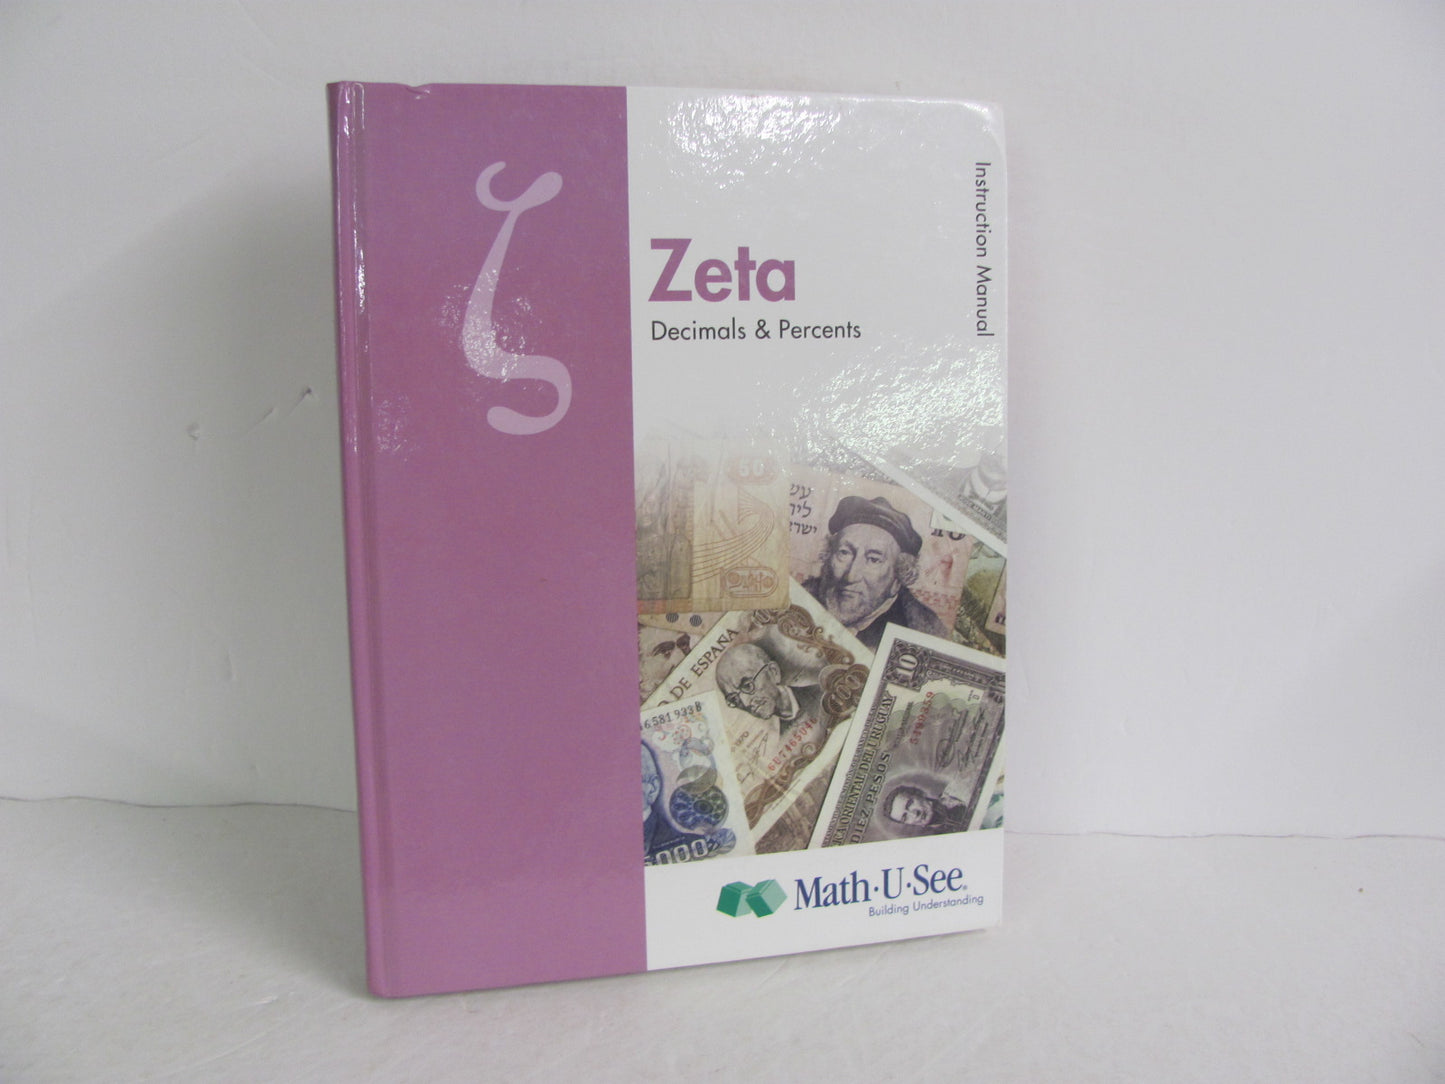 Zeta Math U See Instruction Manual  Pre-Owned Demme Mathematics Textbooks